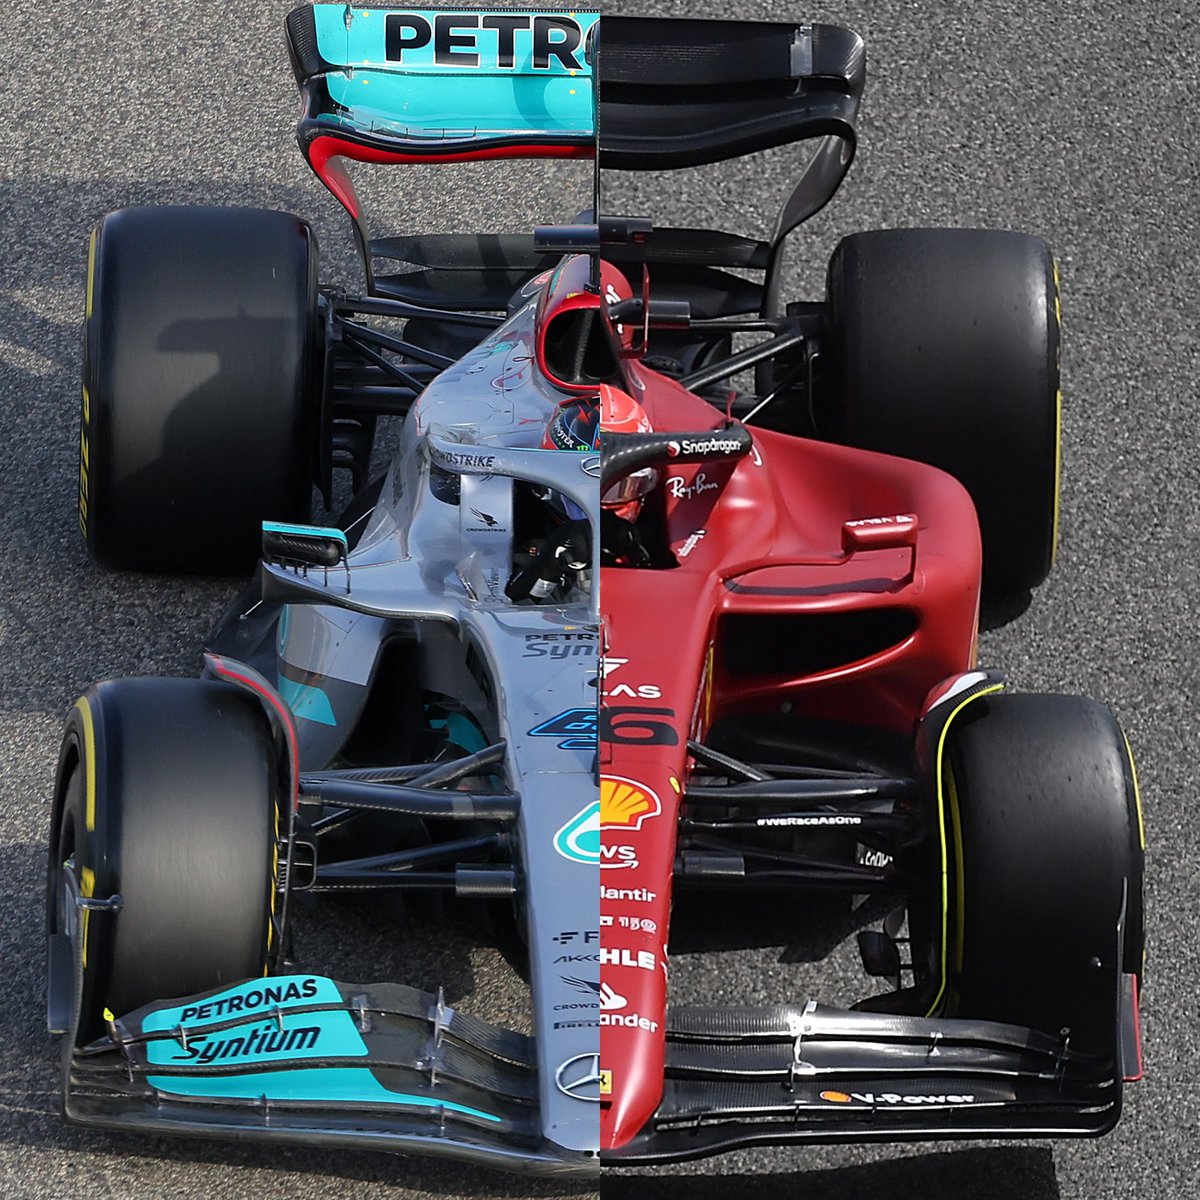 Formula 1 Mercedesamgf1 Vs Scuderiaferrari F1 T Co Sz7ri9cj2u Twitter